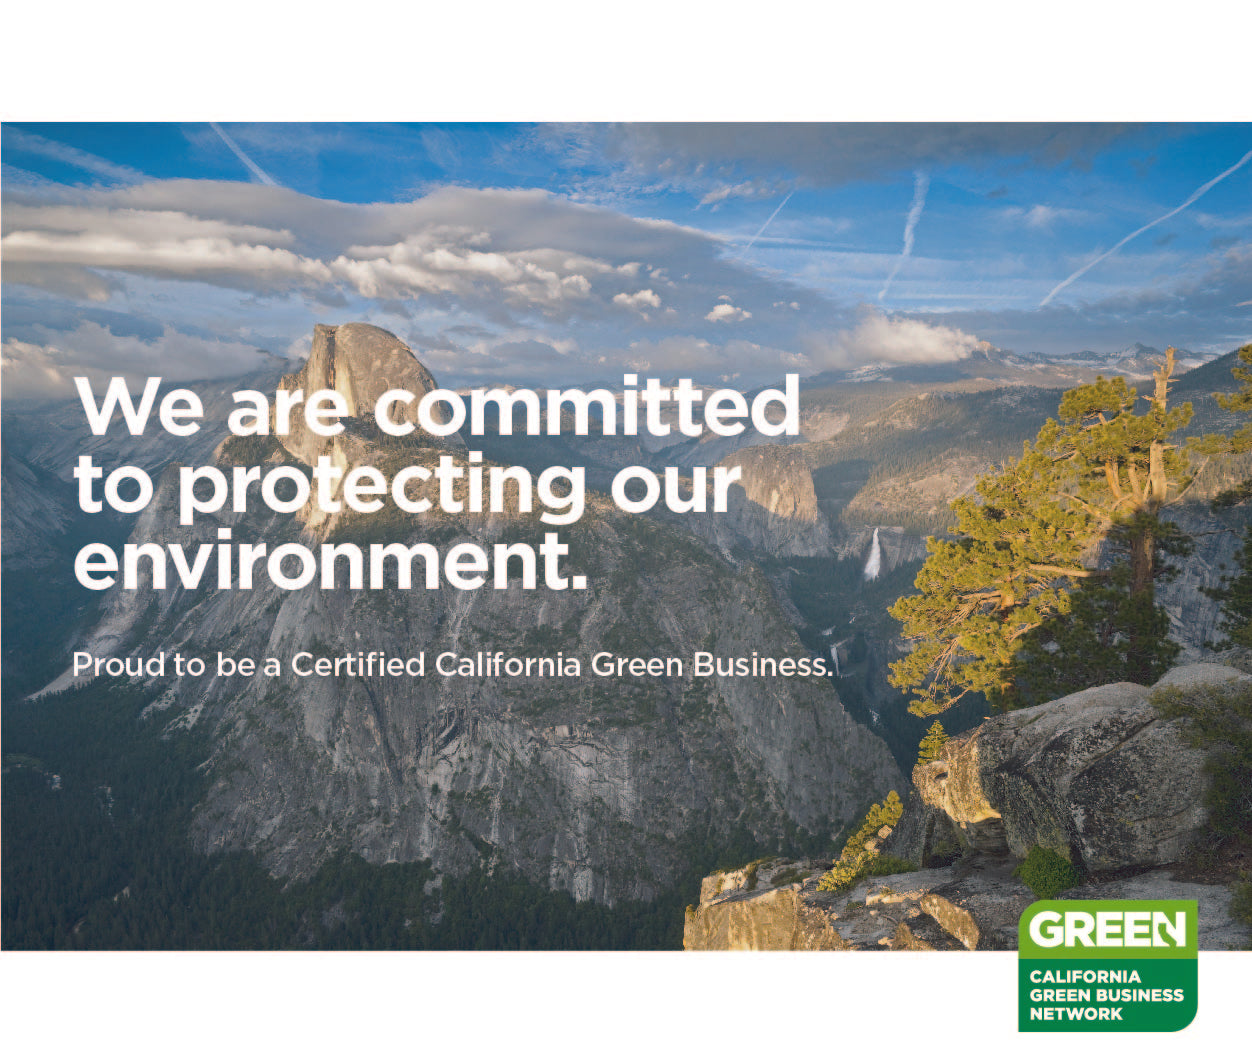 Ridge Merino Receives California Green Business Certification